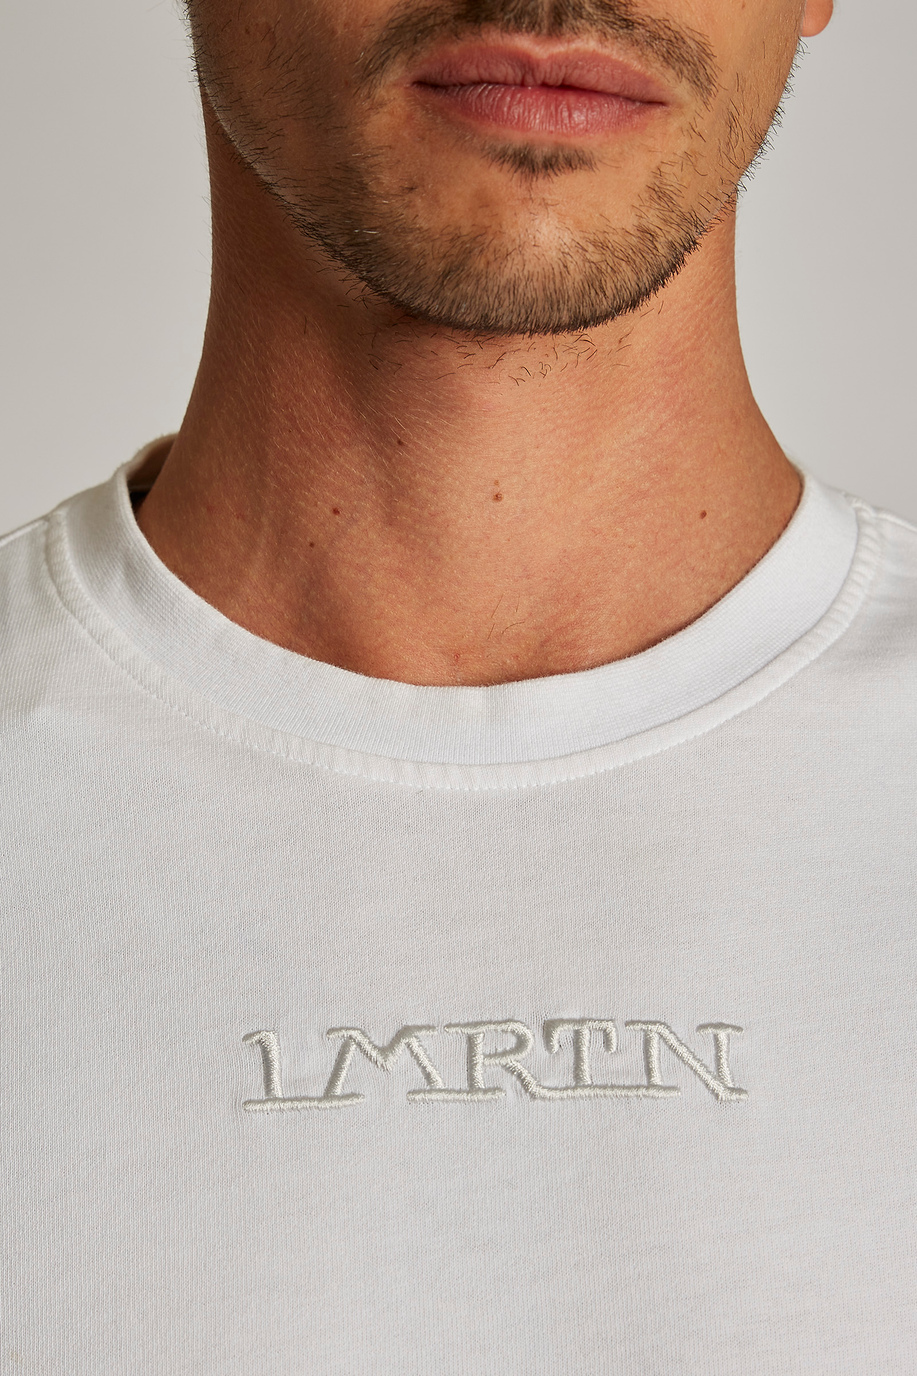 Camiseta de hombre de algodón de manga corta, modelo oversize